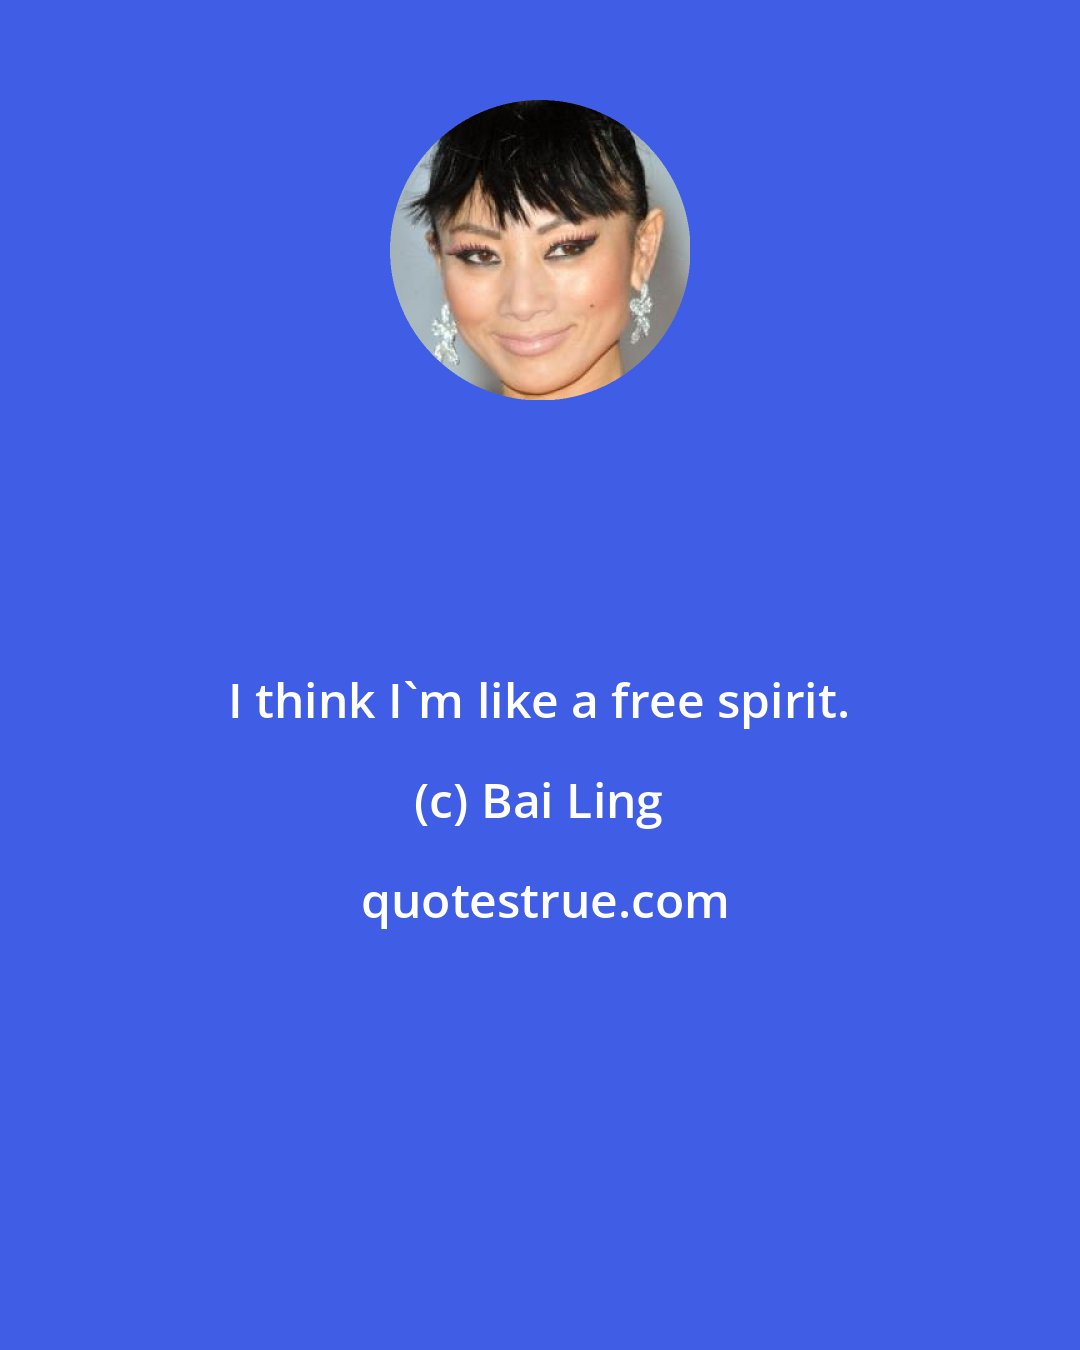 Bai Ling: I think I'm like a free spirit.